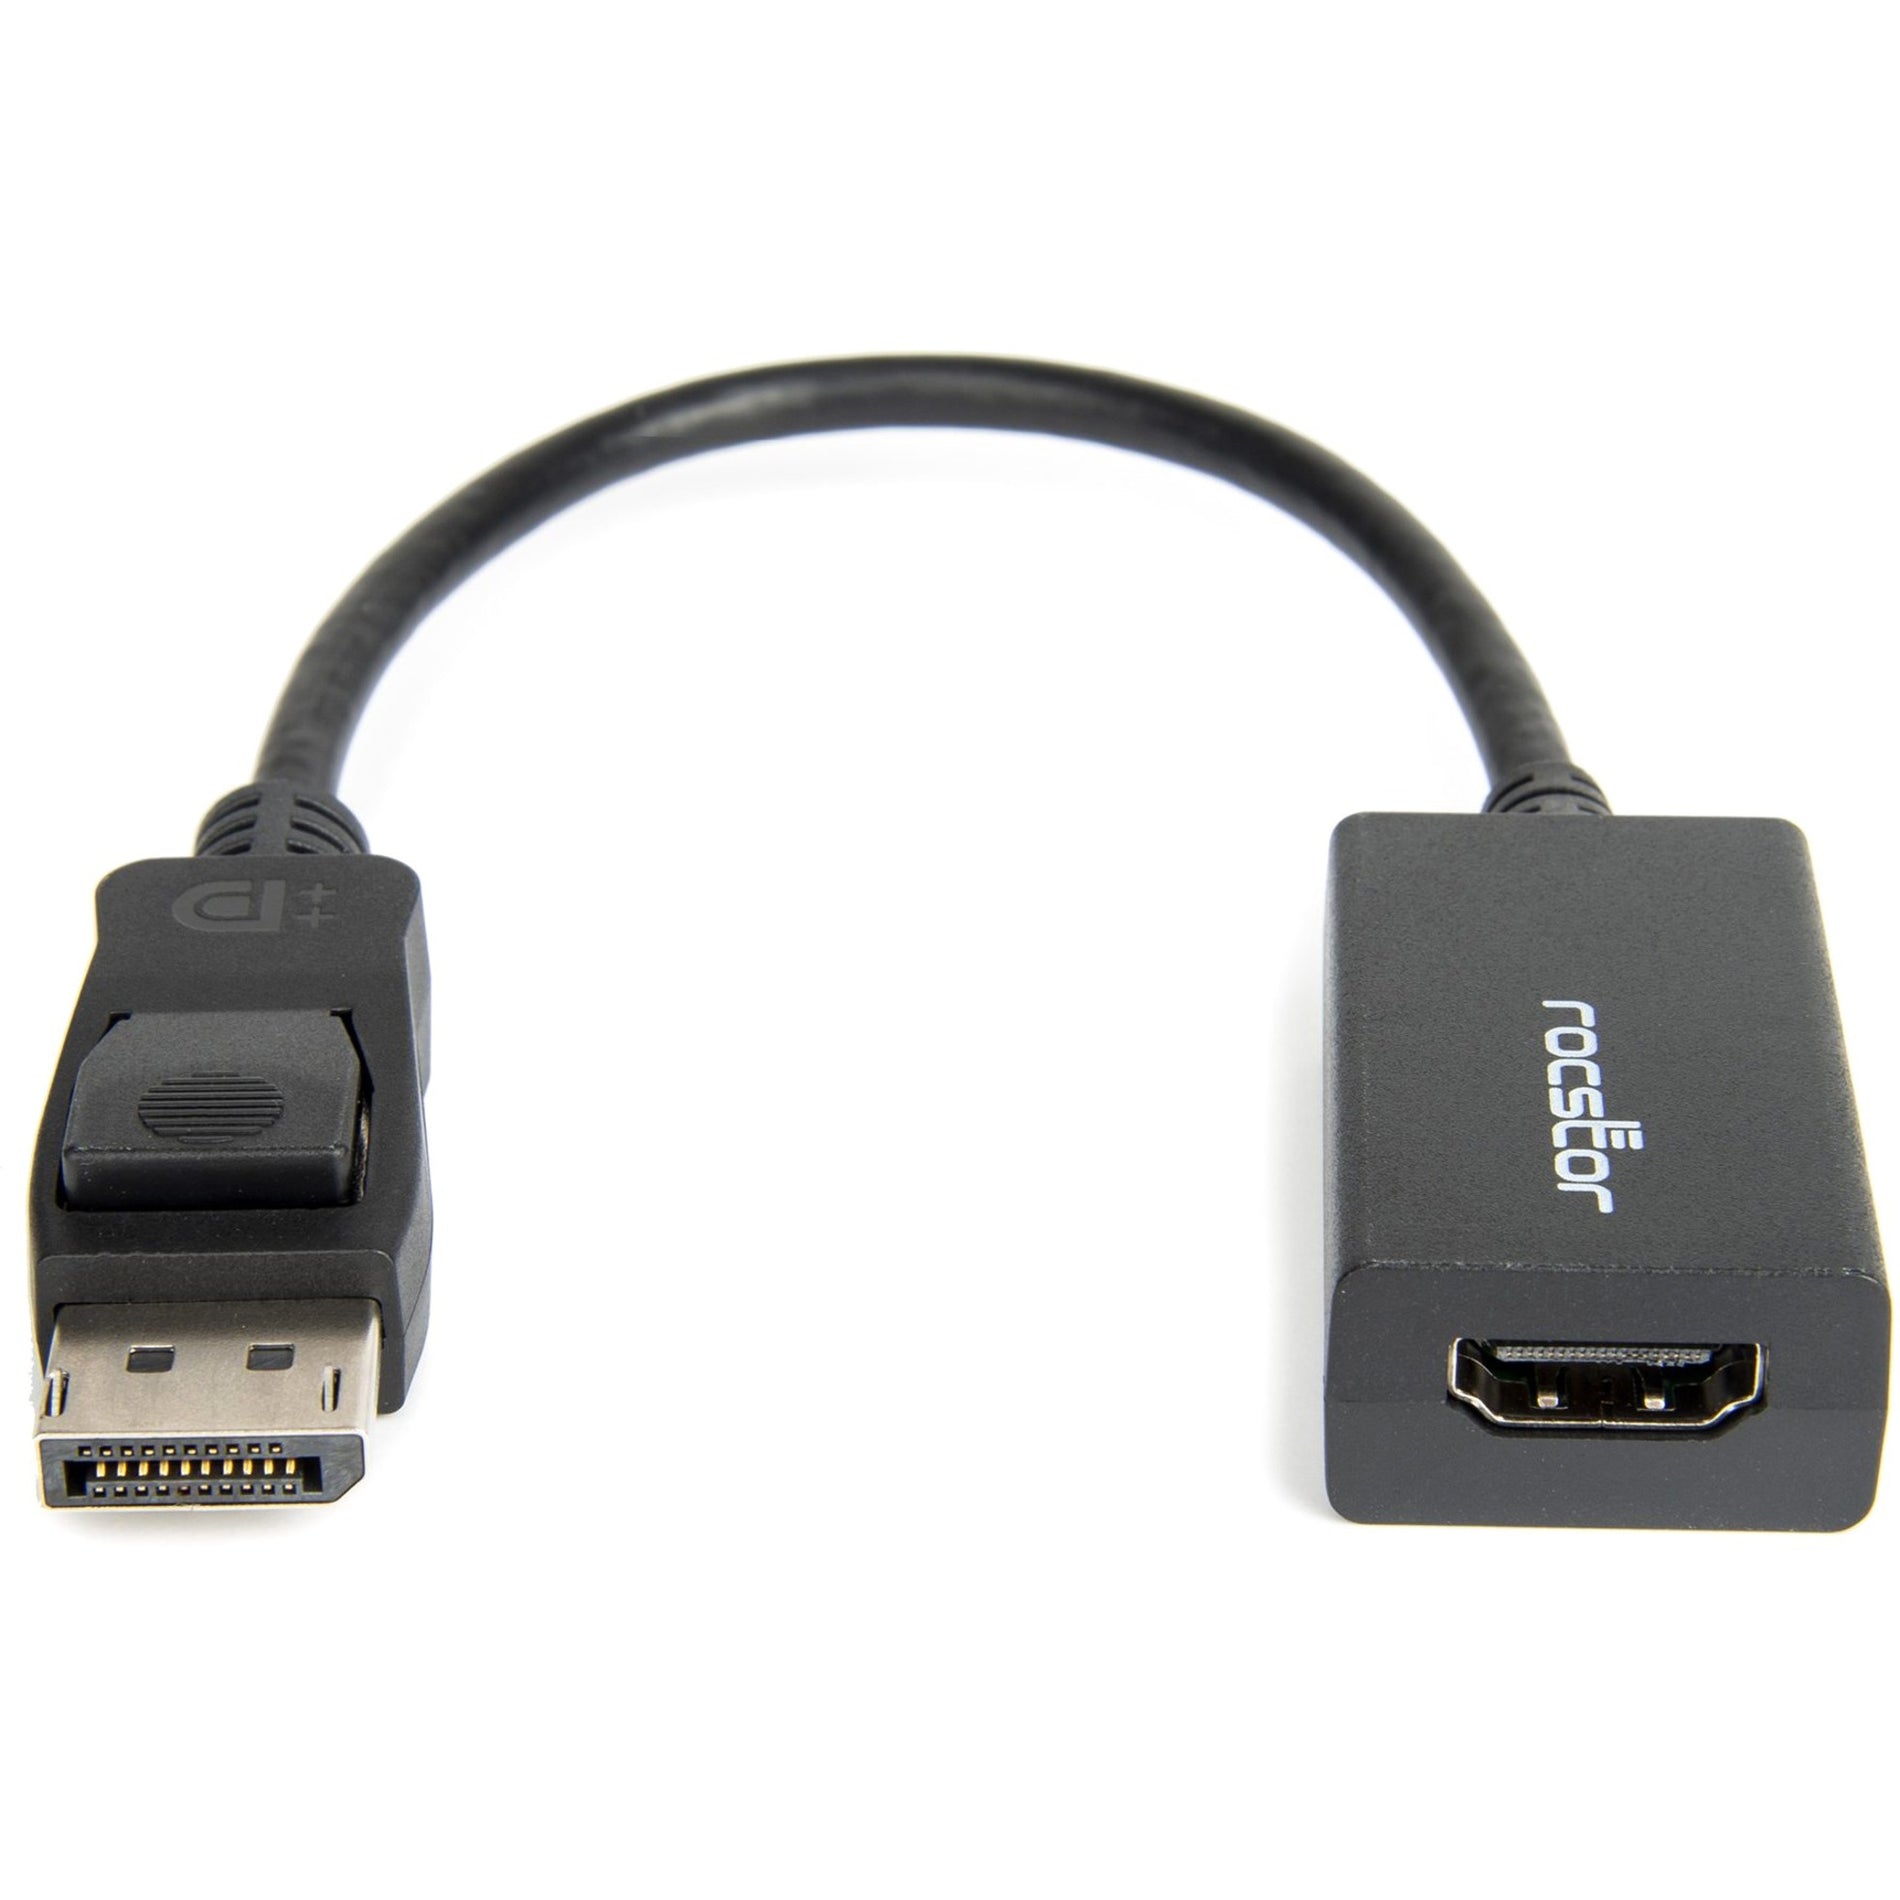 Rocstor Y10A101-B1 عرض موصل العرض (ذكر) إلى HDMI (أنثى) محول 1920x1200 دعم القرار روكستور